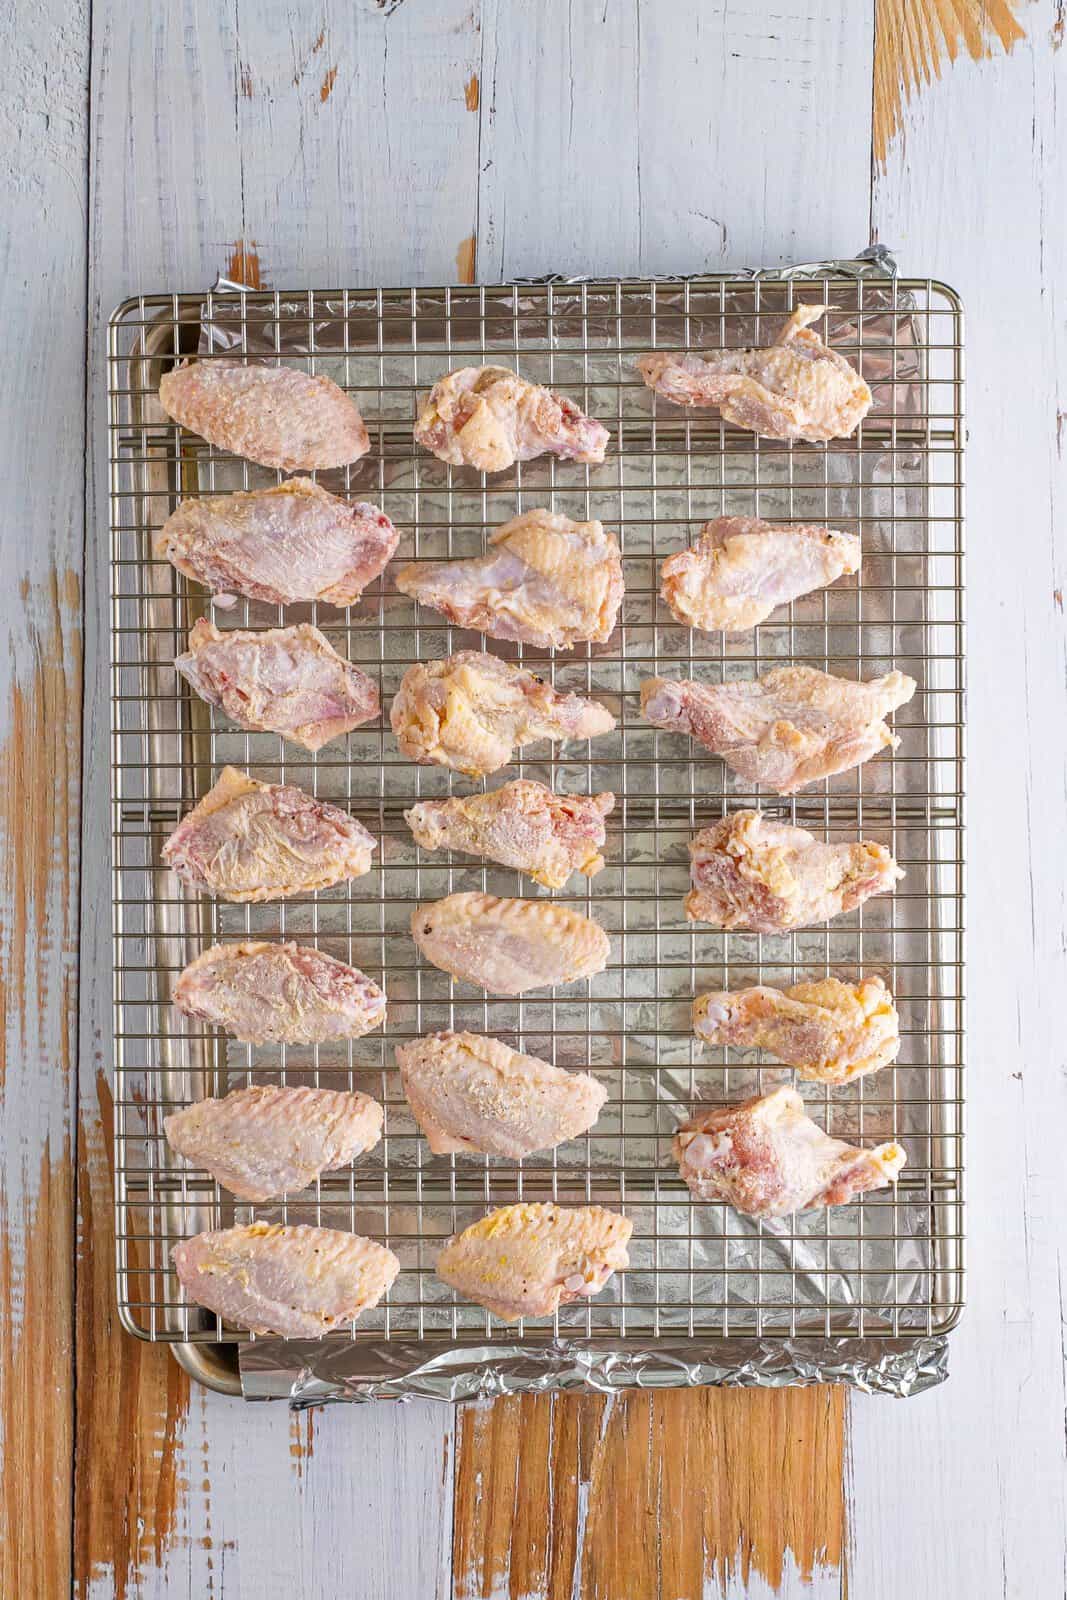 A rack of seasoned chicken wings.